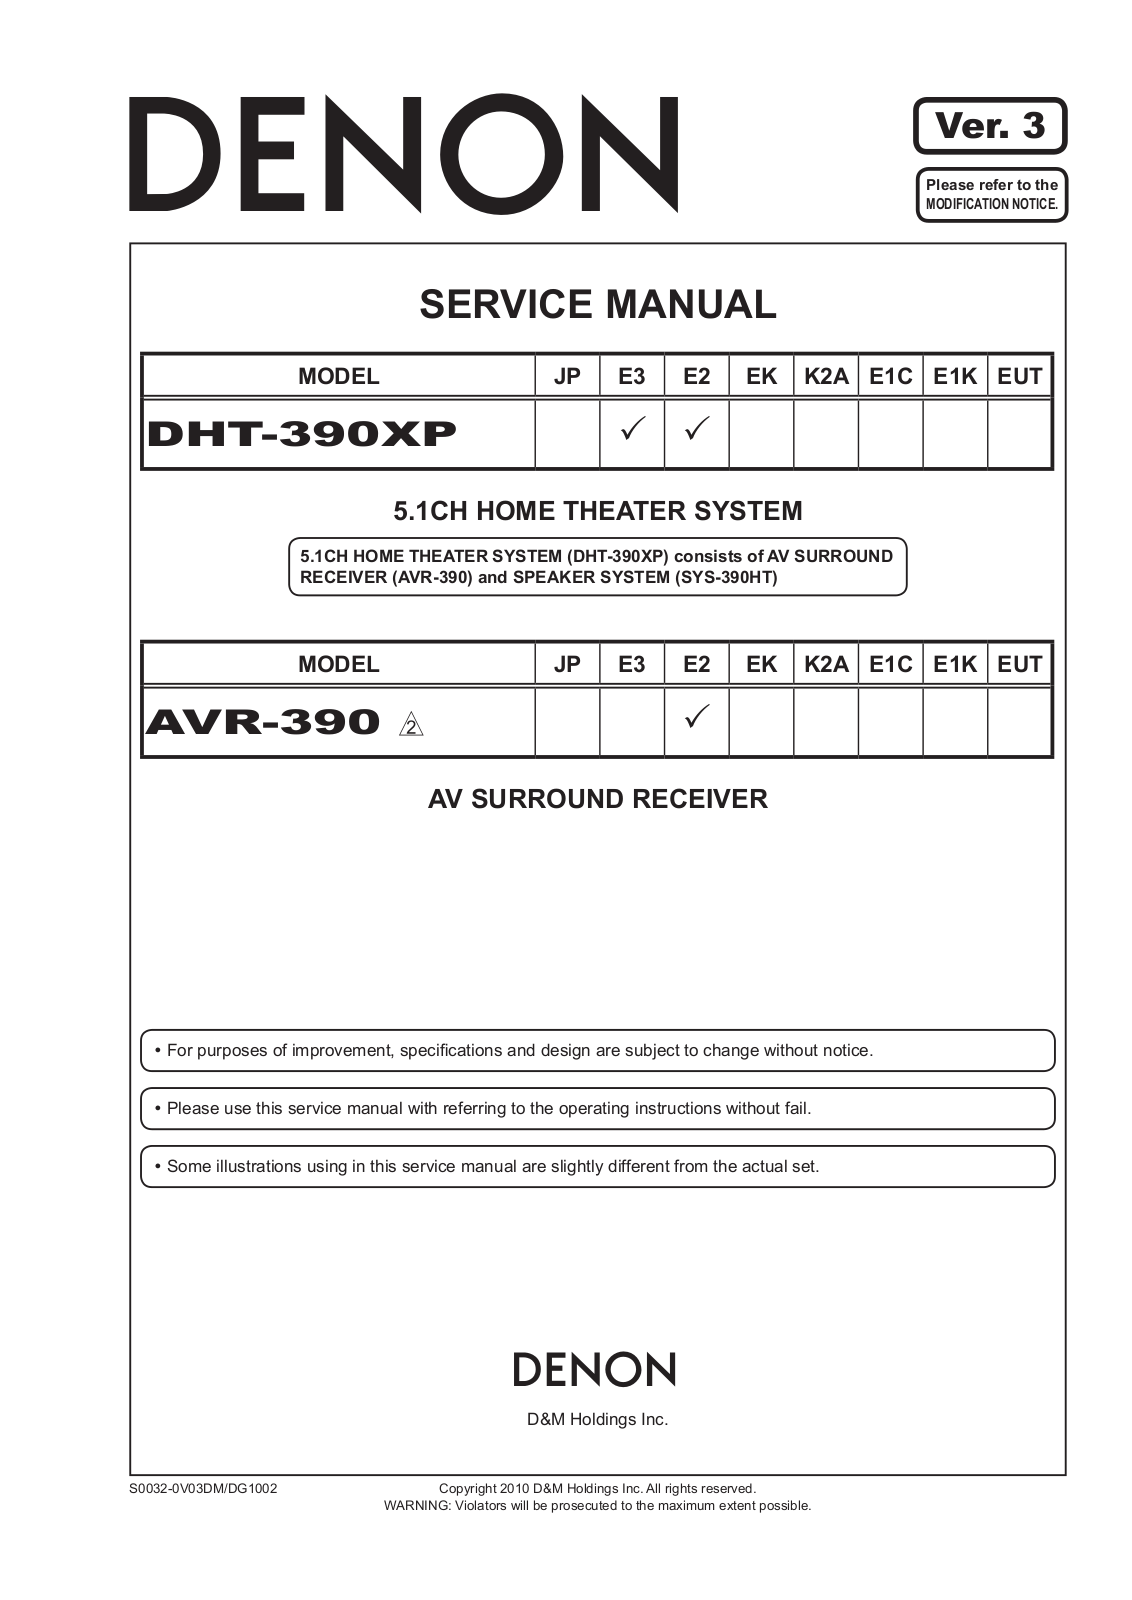 Denon DHT-390XP Service Manual